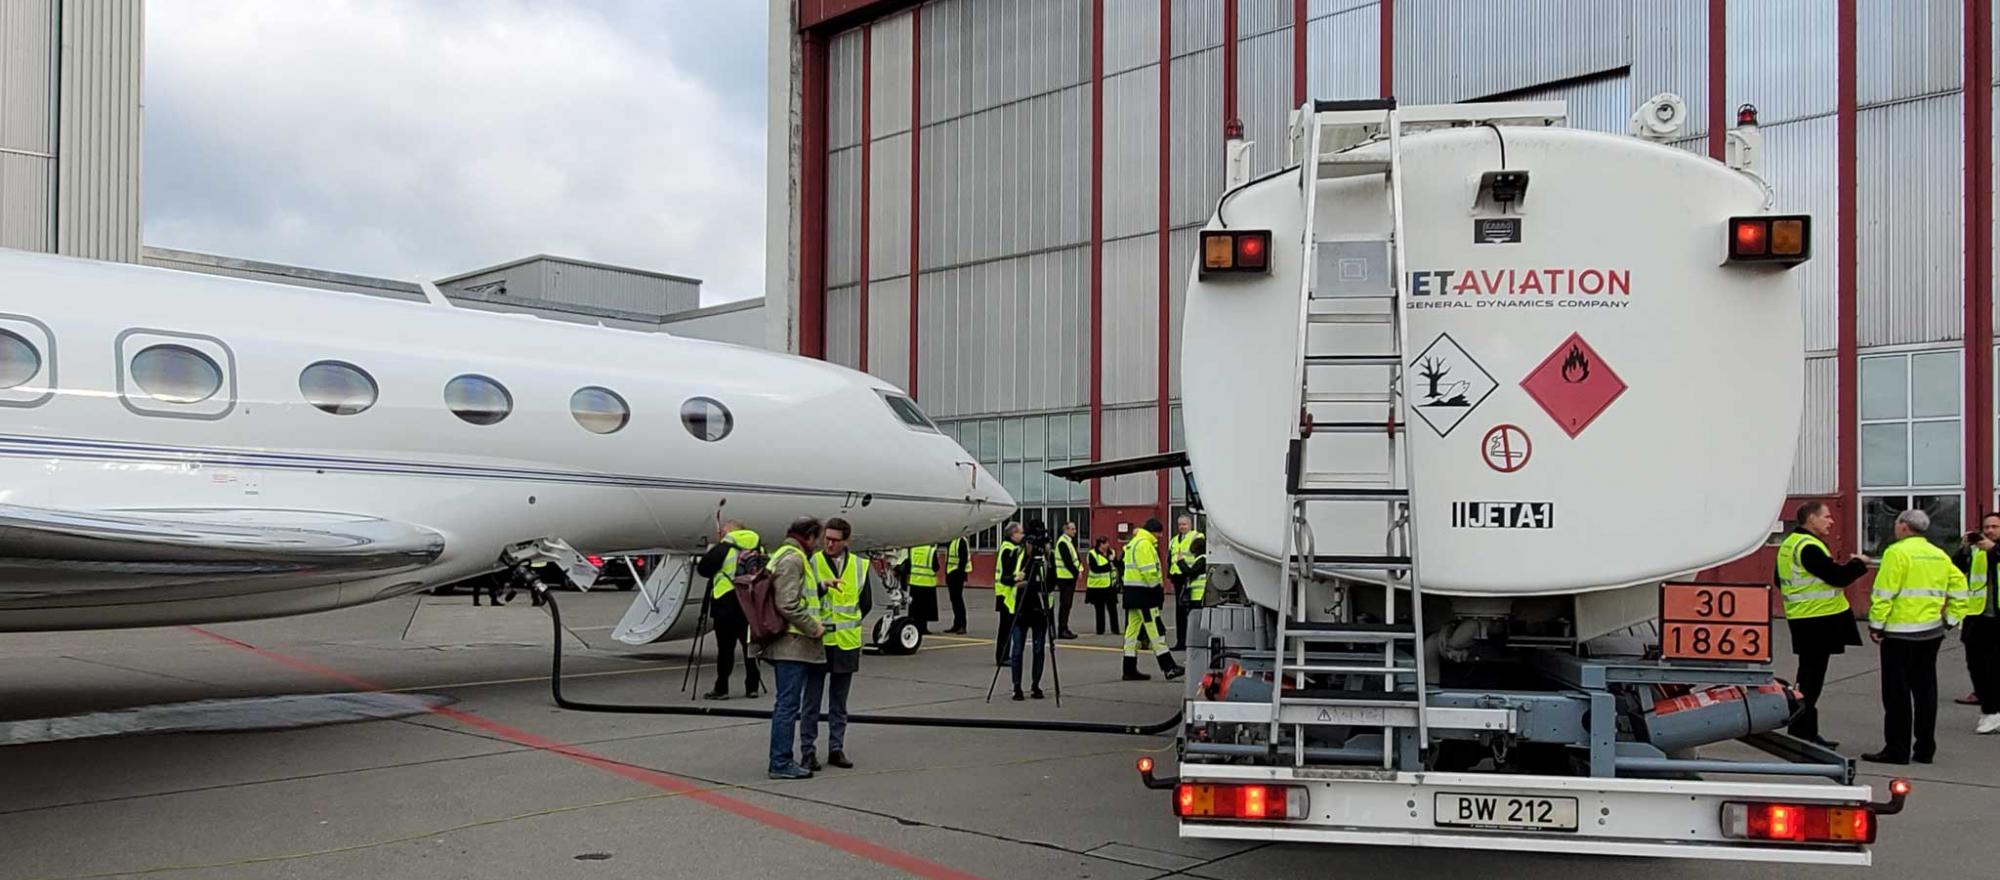 Business Jet being refueled with SAF in Zurich